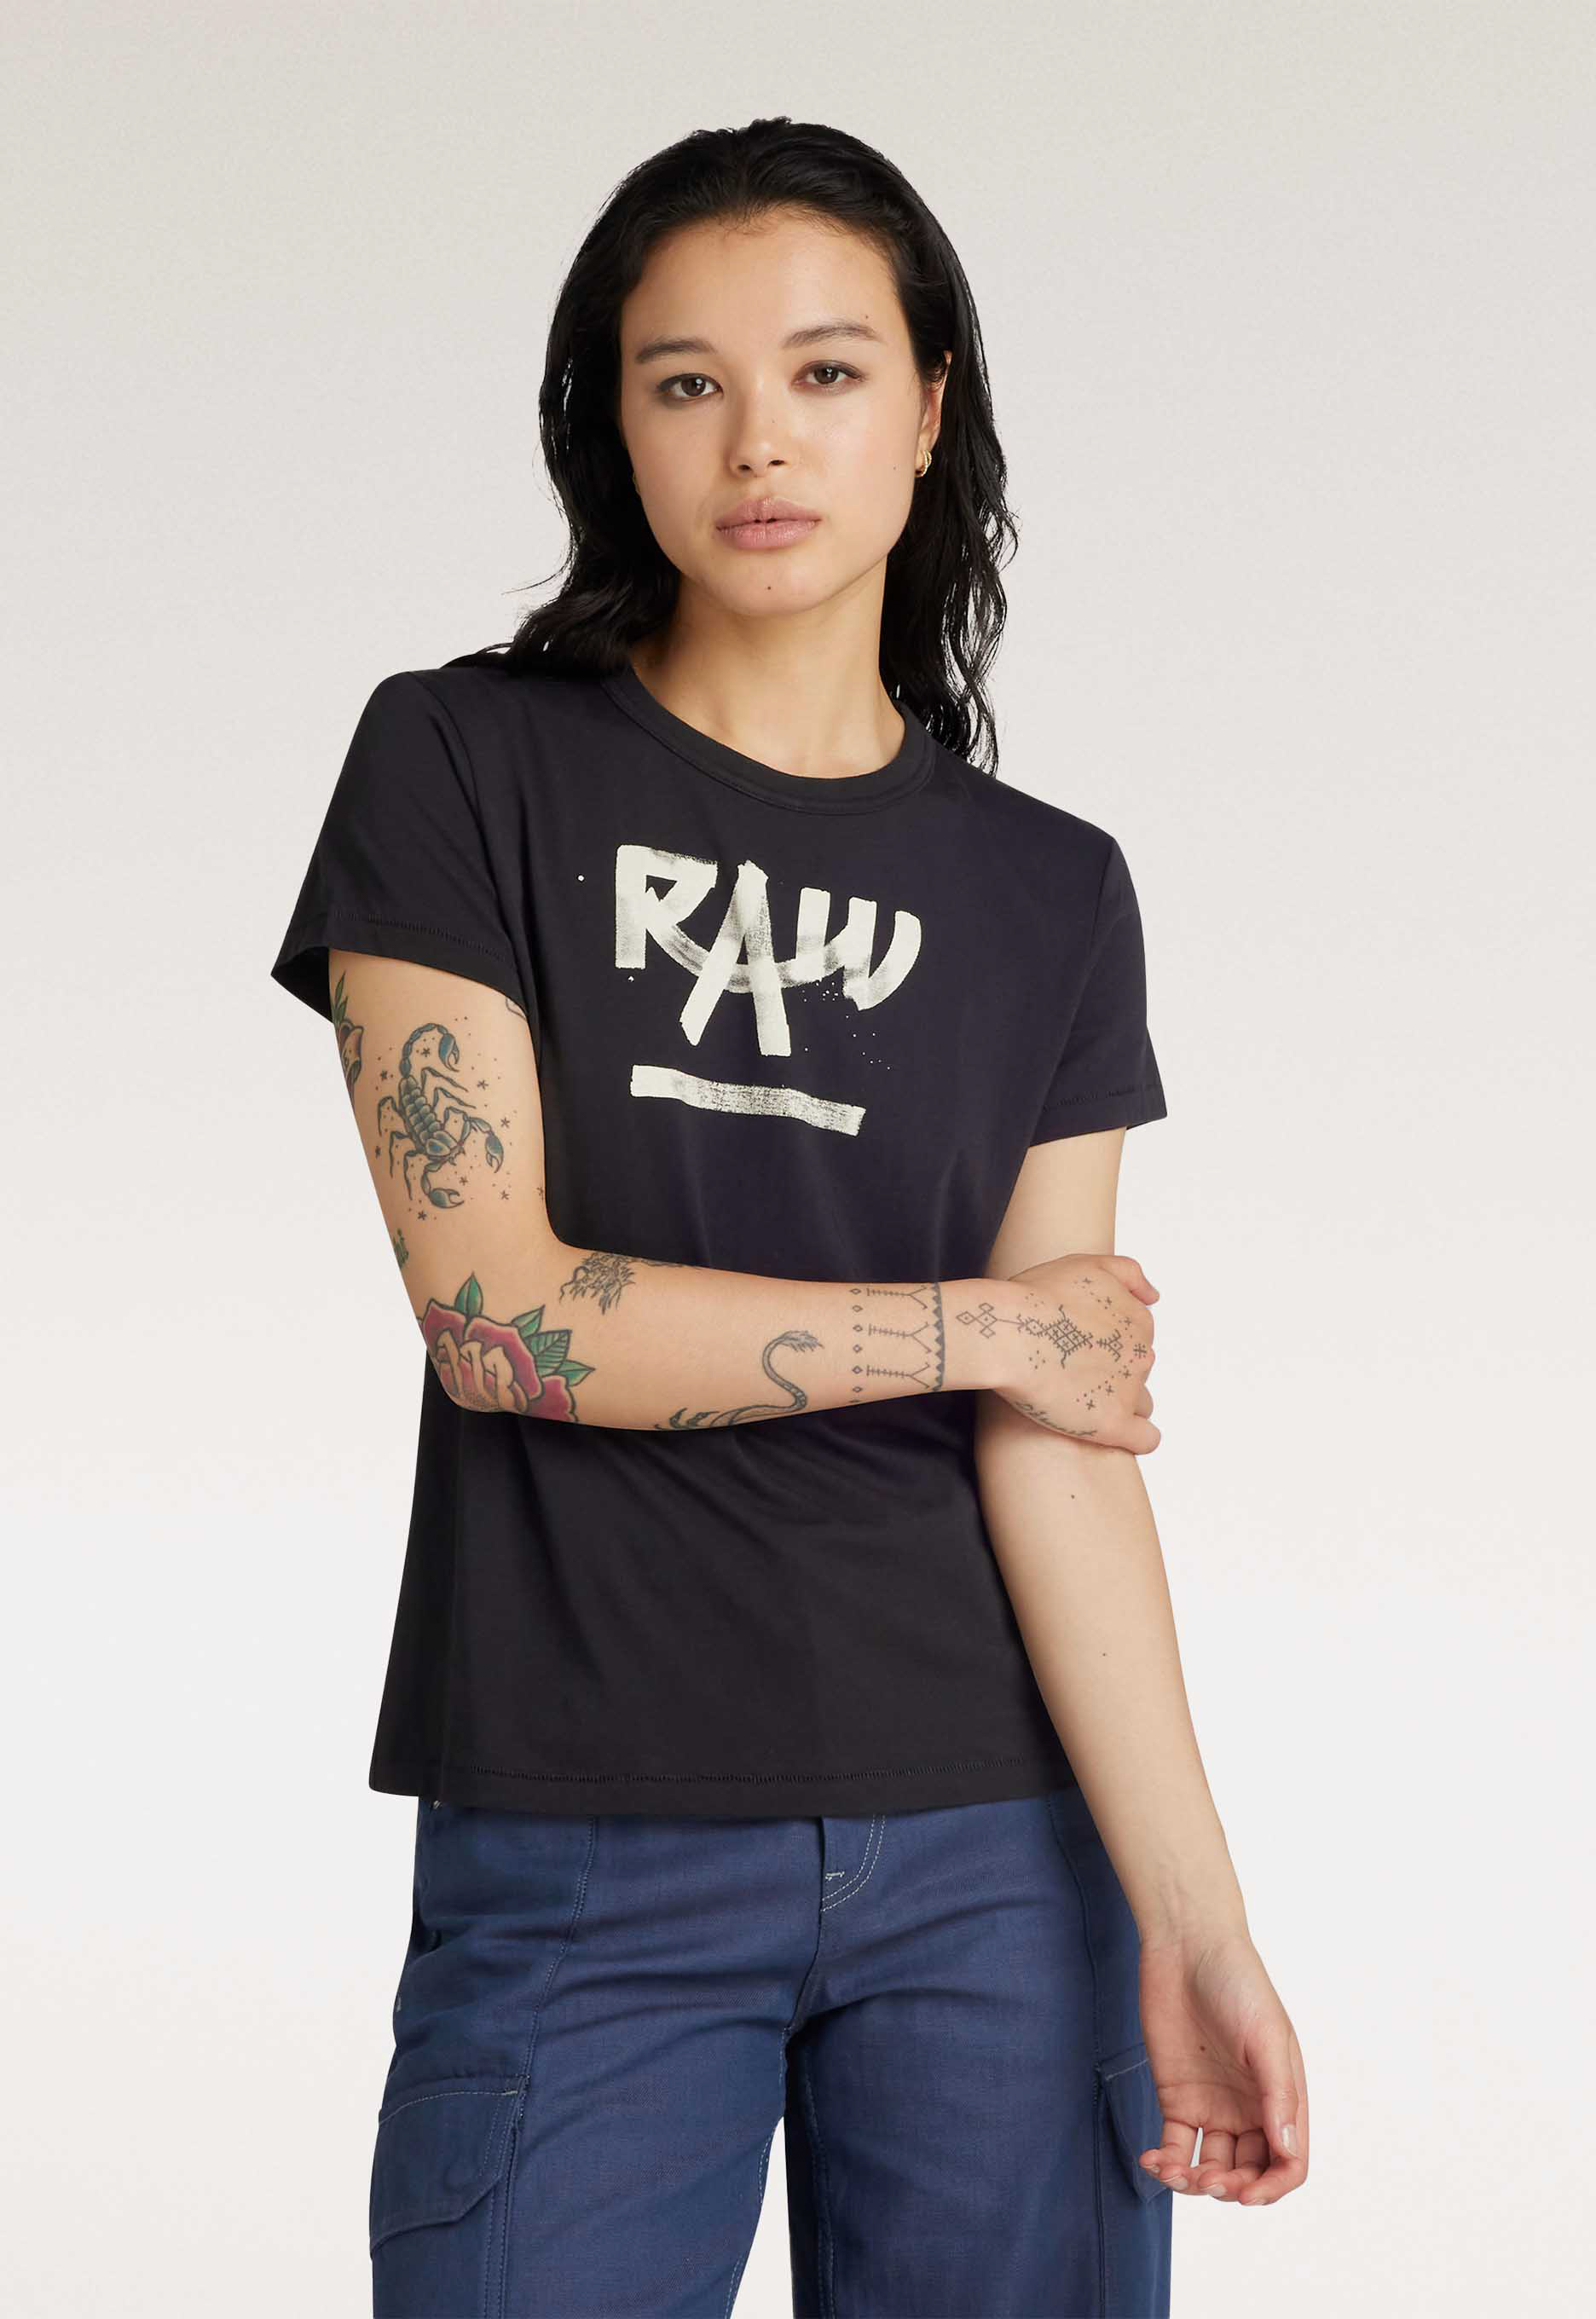 G-star raw Calligraphy T-shirt